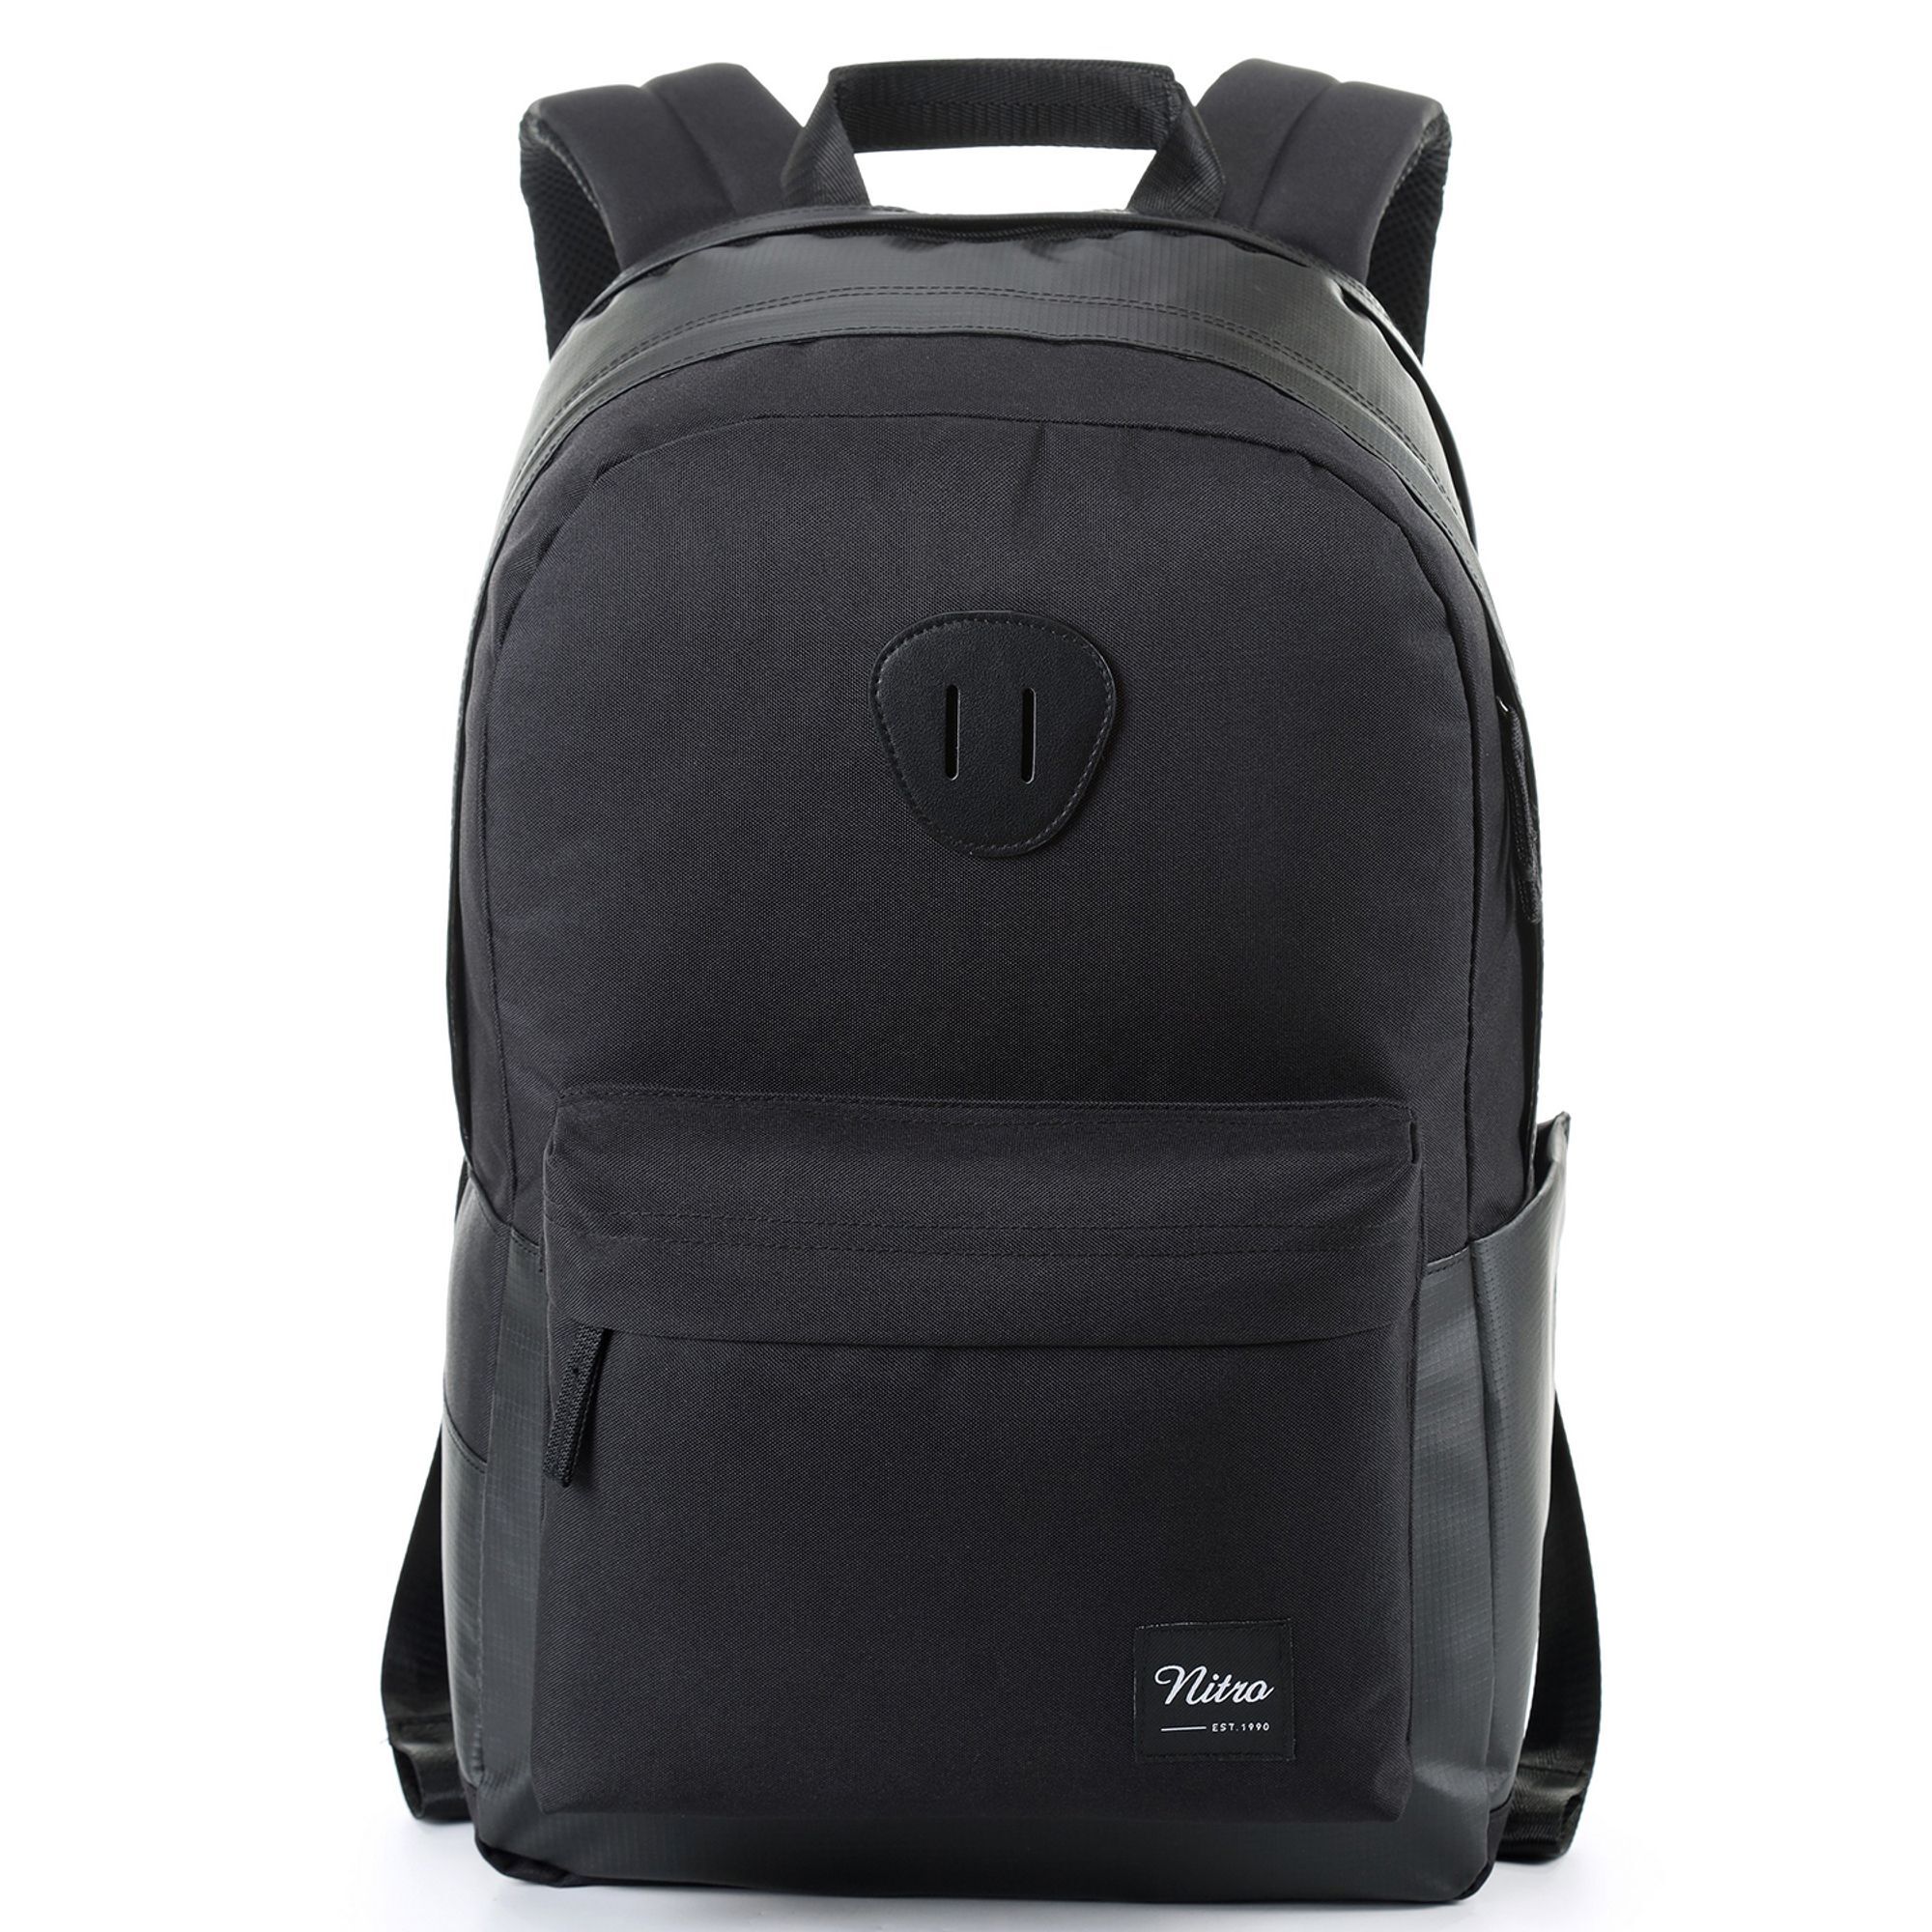 Рюкзак Nitro Urban Plus 45 cm Laptopfach, цвет though black рюкзак wenger trayl 45 cm laptopfach цвет gravity black